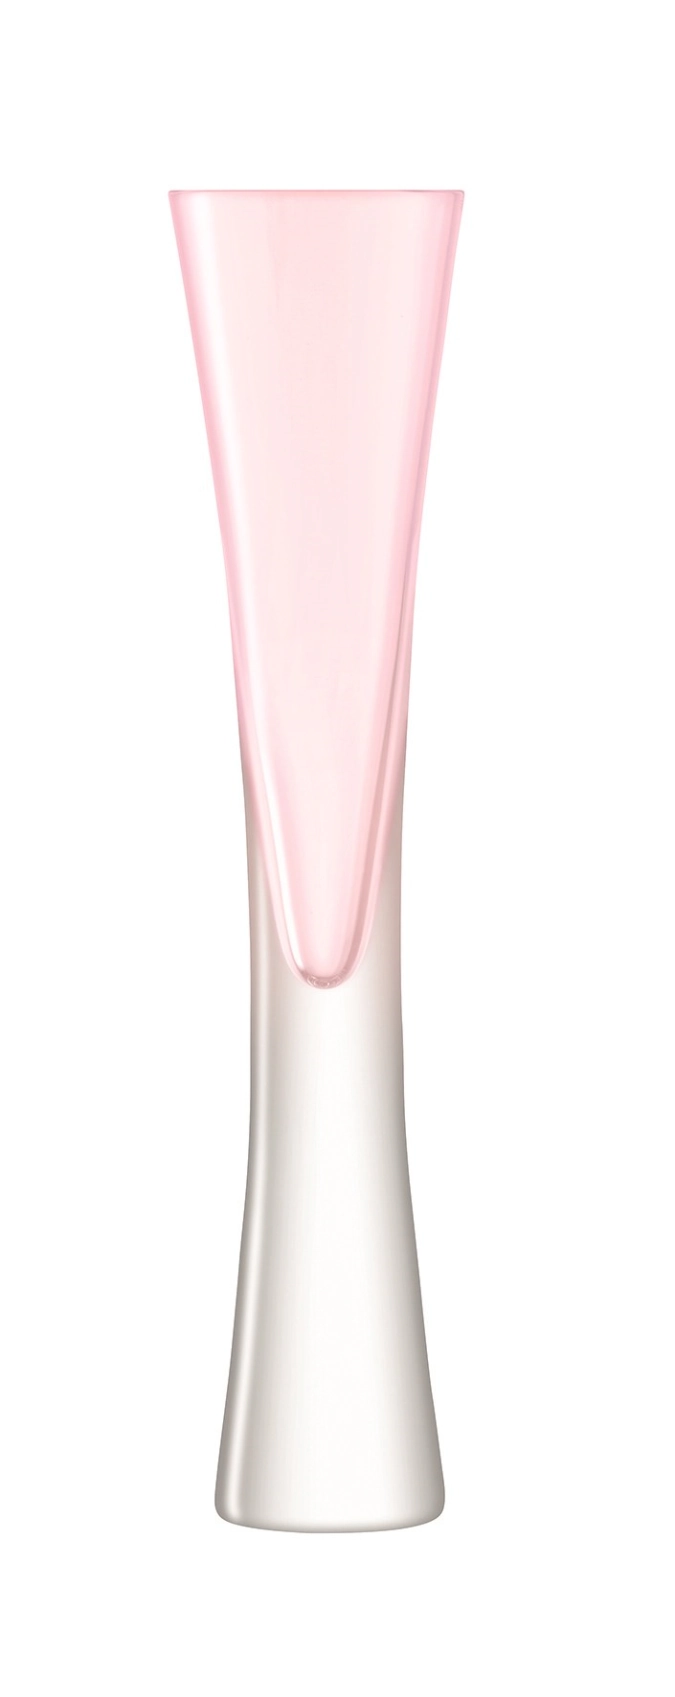 Set de 2 flûtes à champagne moya - 170ml rose clair